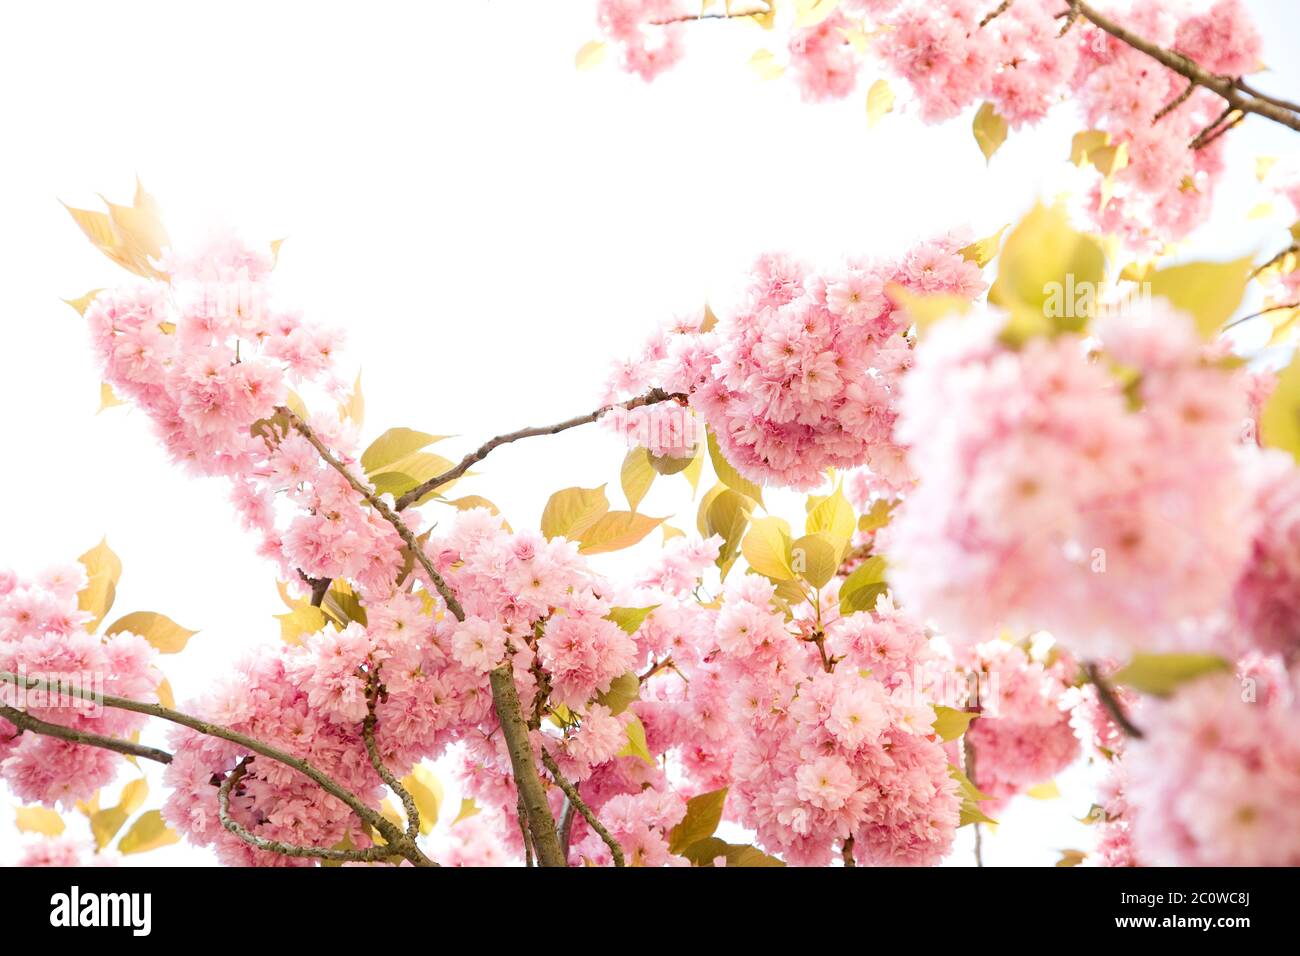 bloom blossom flourish flourishing blossoms spring petals cherry blossom Stock Photo